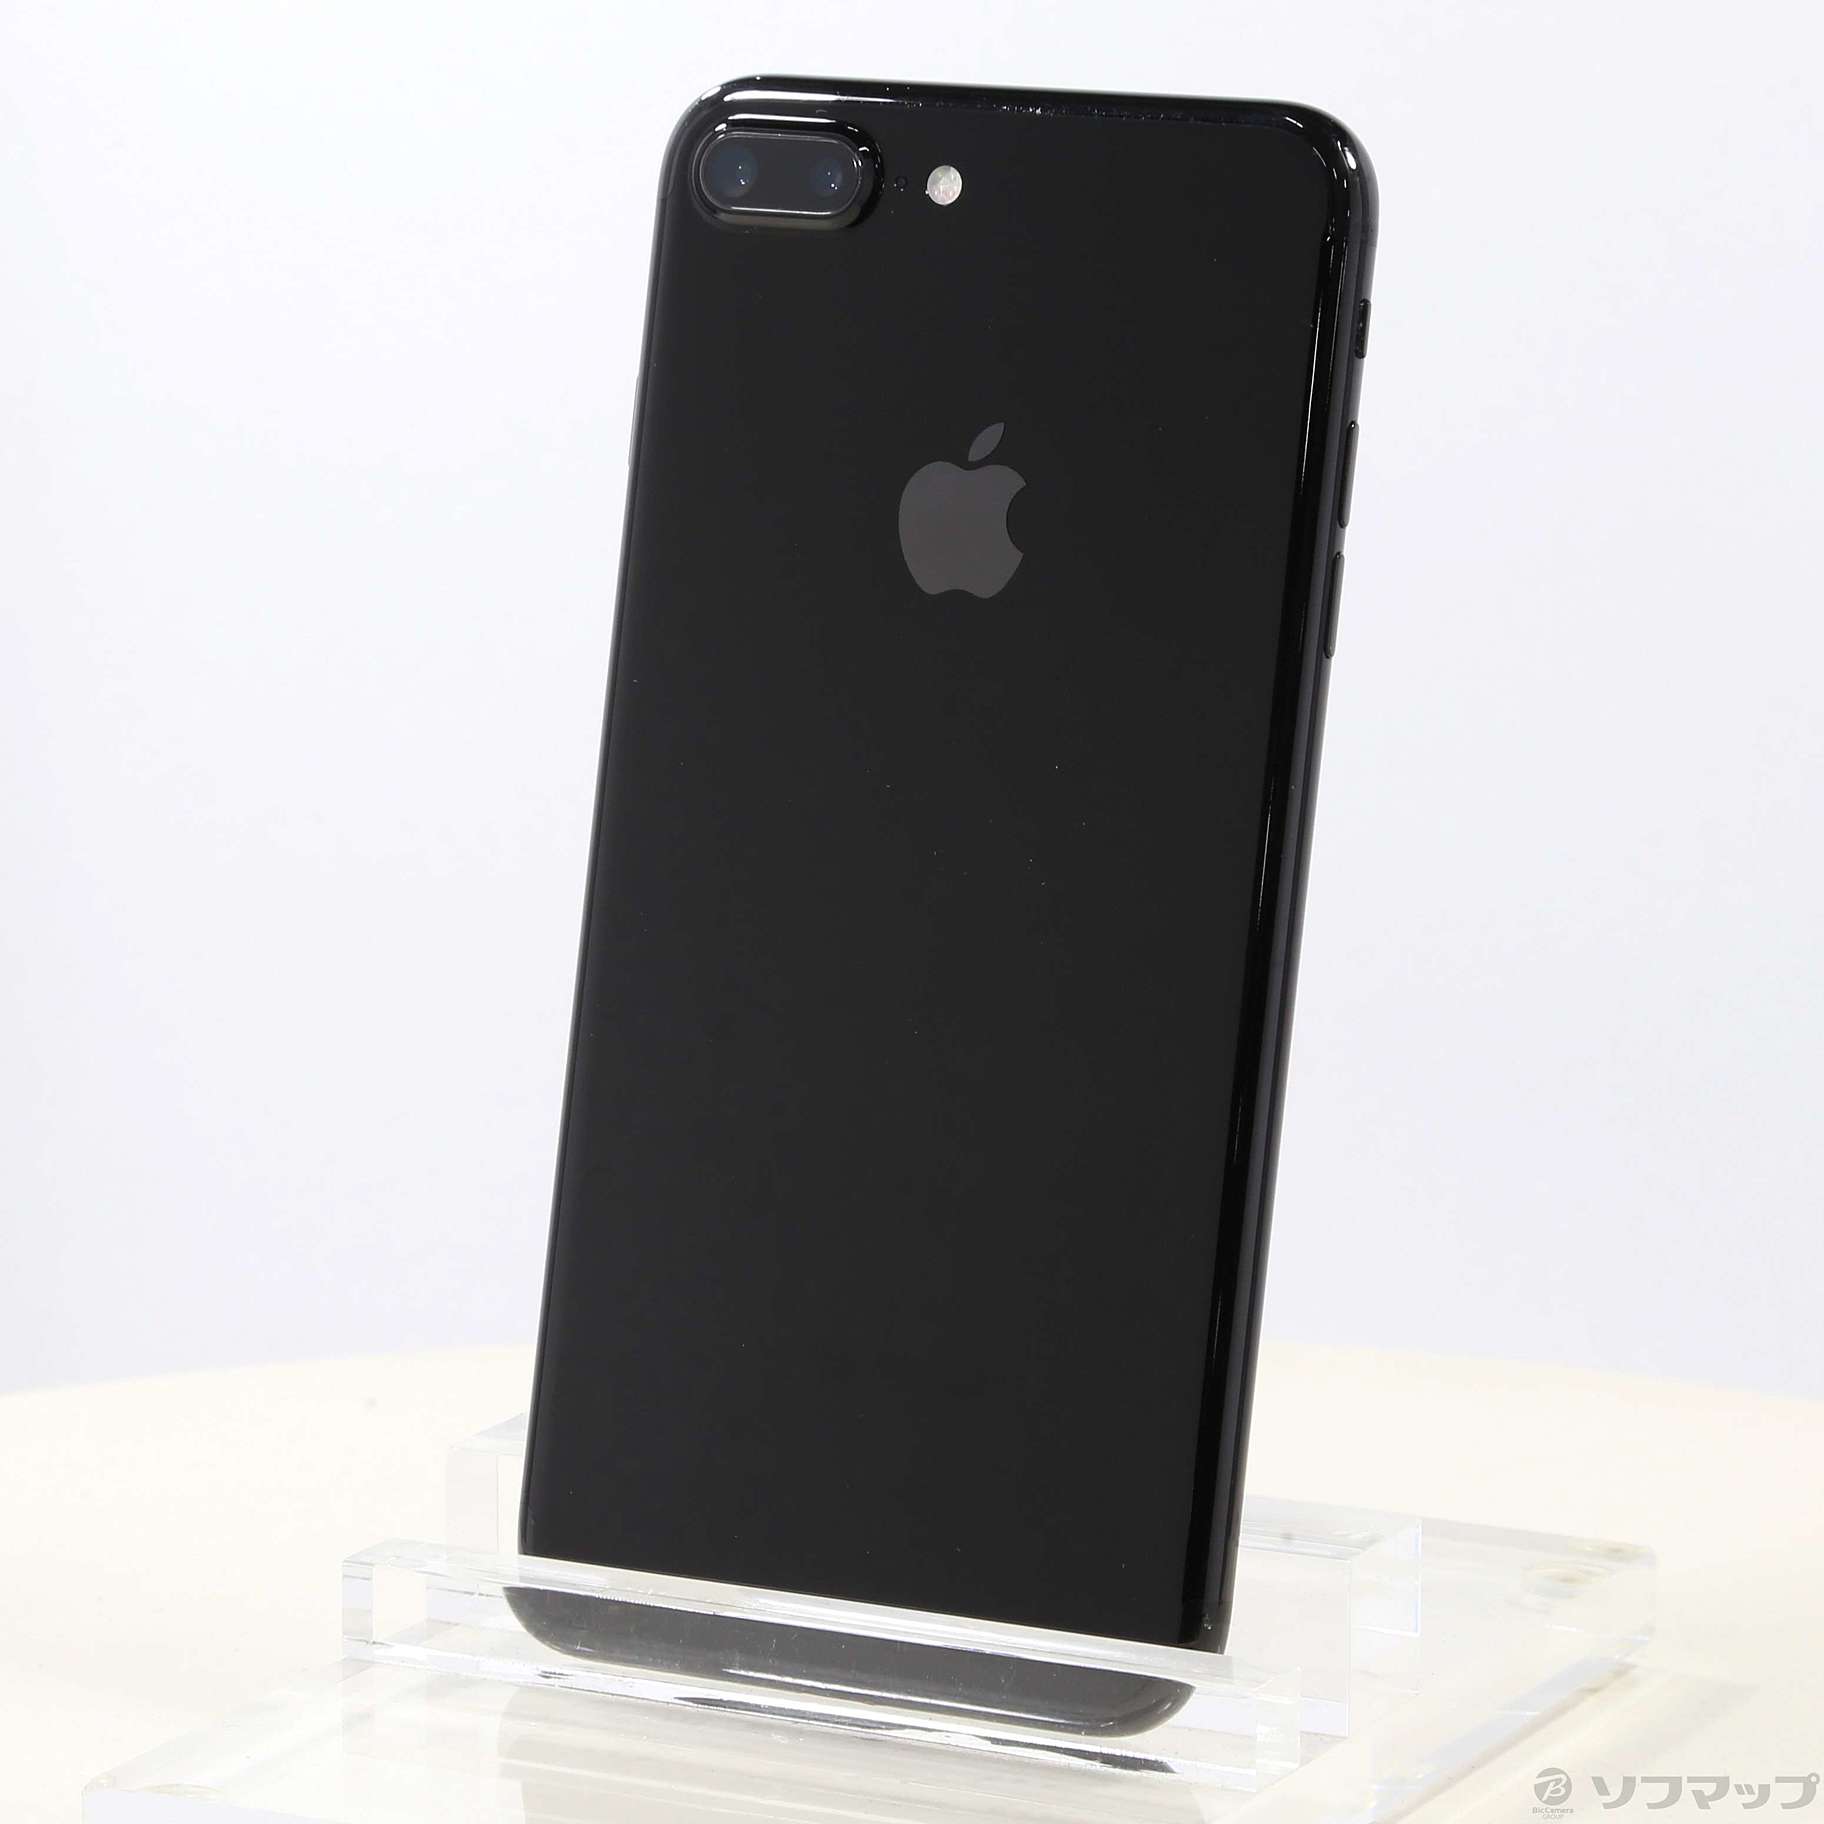 iPhone 7 Plus Jet Black 256 GB SIMフリースマートフォン本体 - www